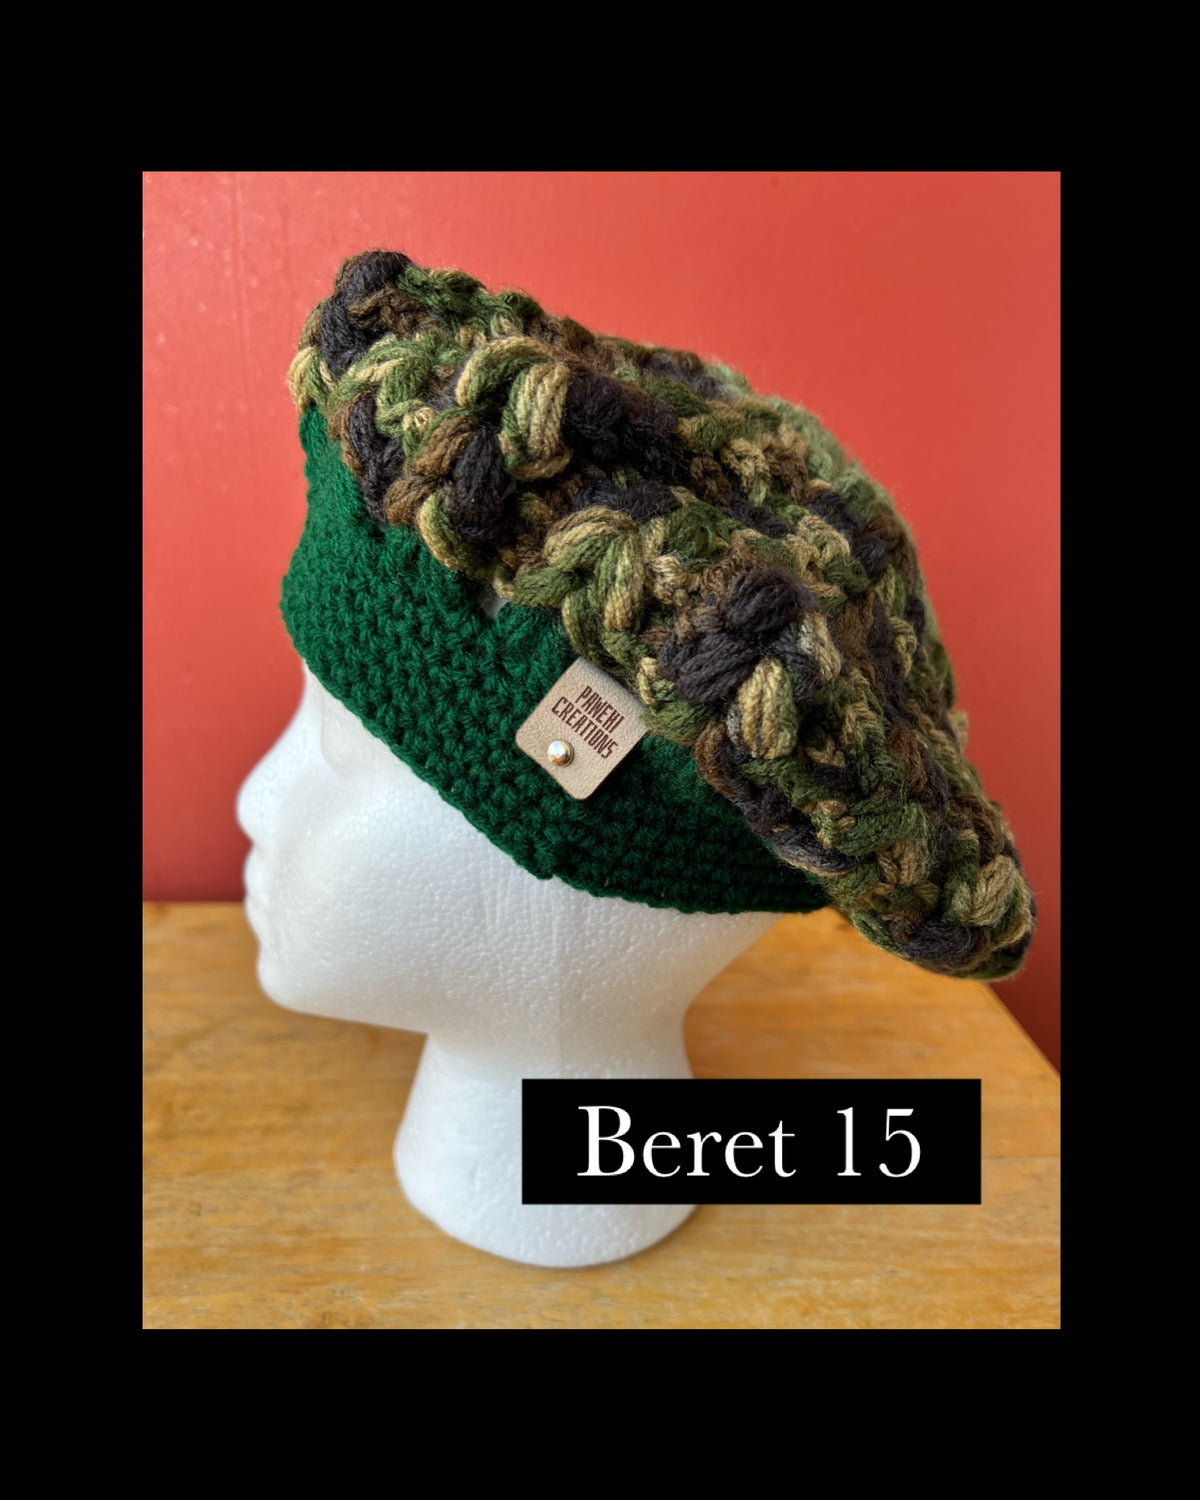 Pop-Up Mākeke - Pawehi Creations - Crochet Beret Hat - Style #15